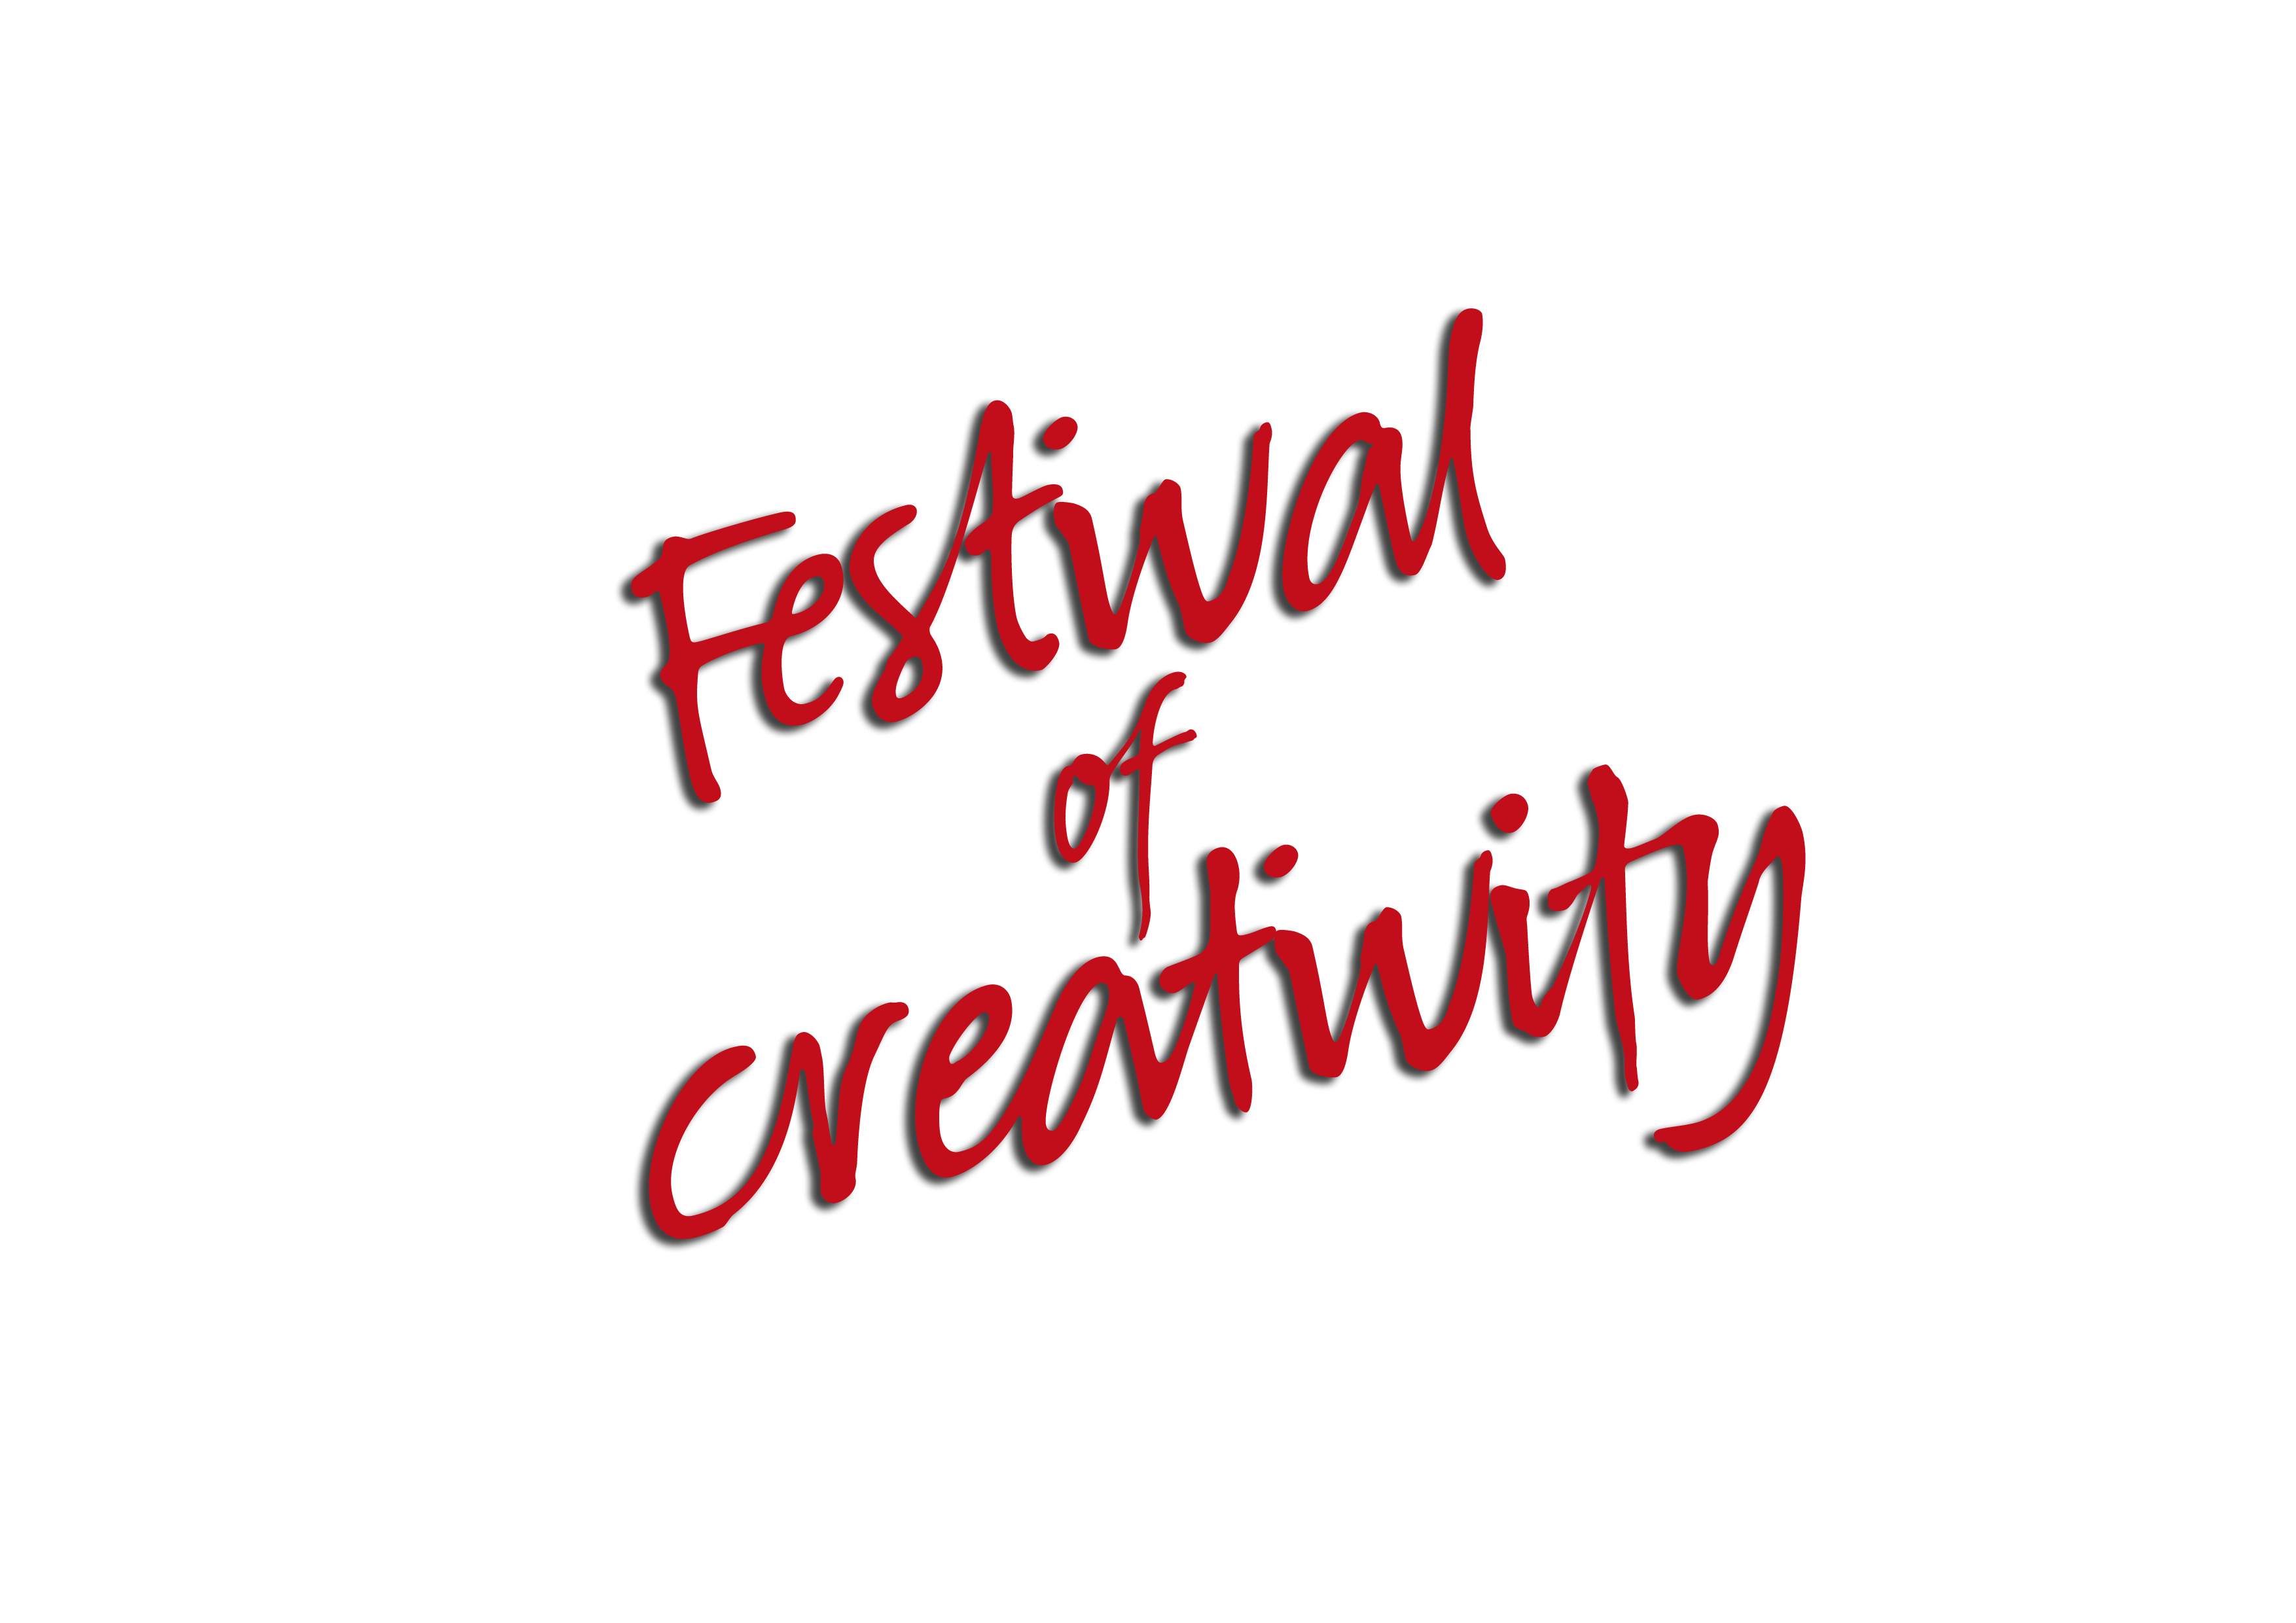 Festival of creativity